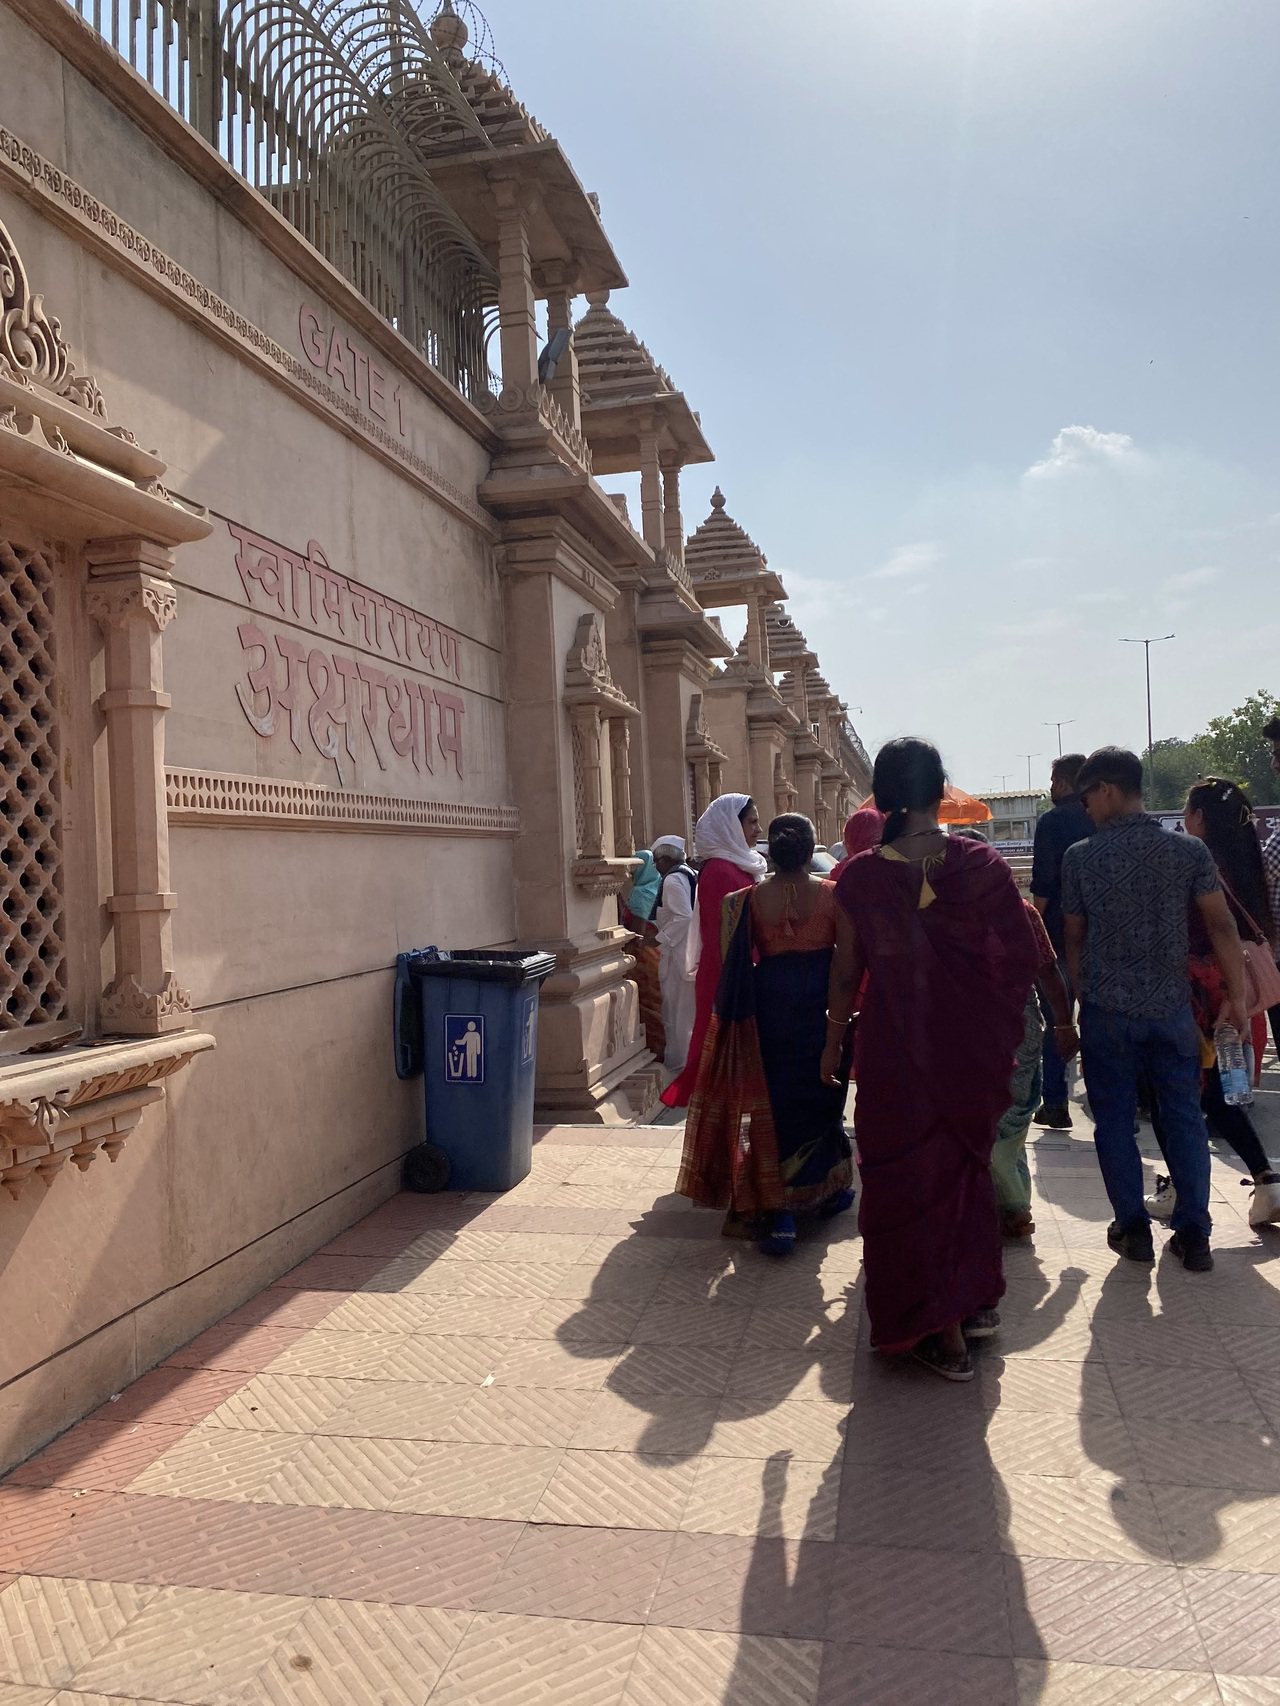 ▲ 世界公認最大印度廟 Swaminarayan Akshardham入口處